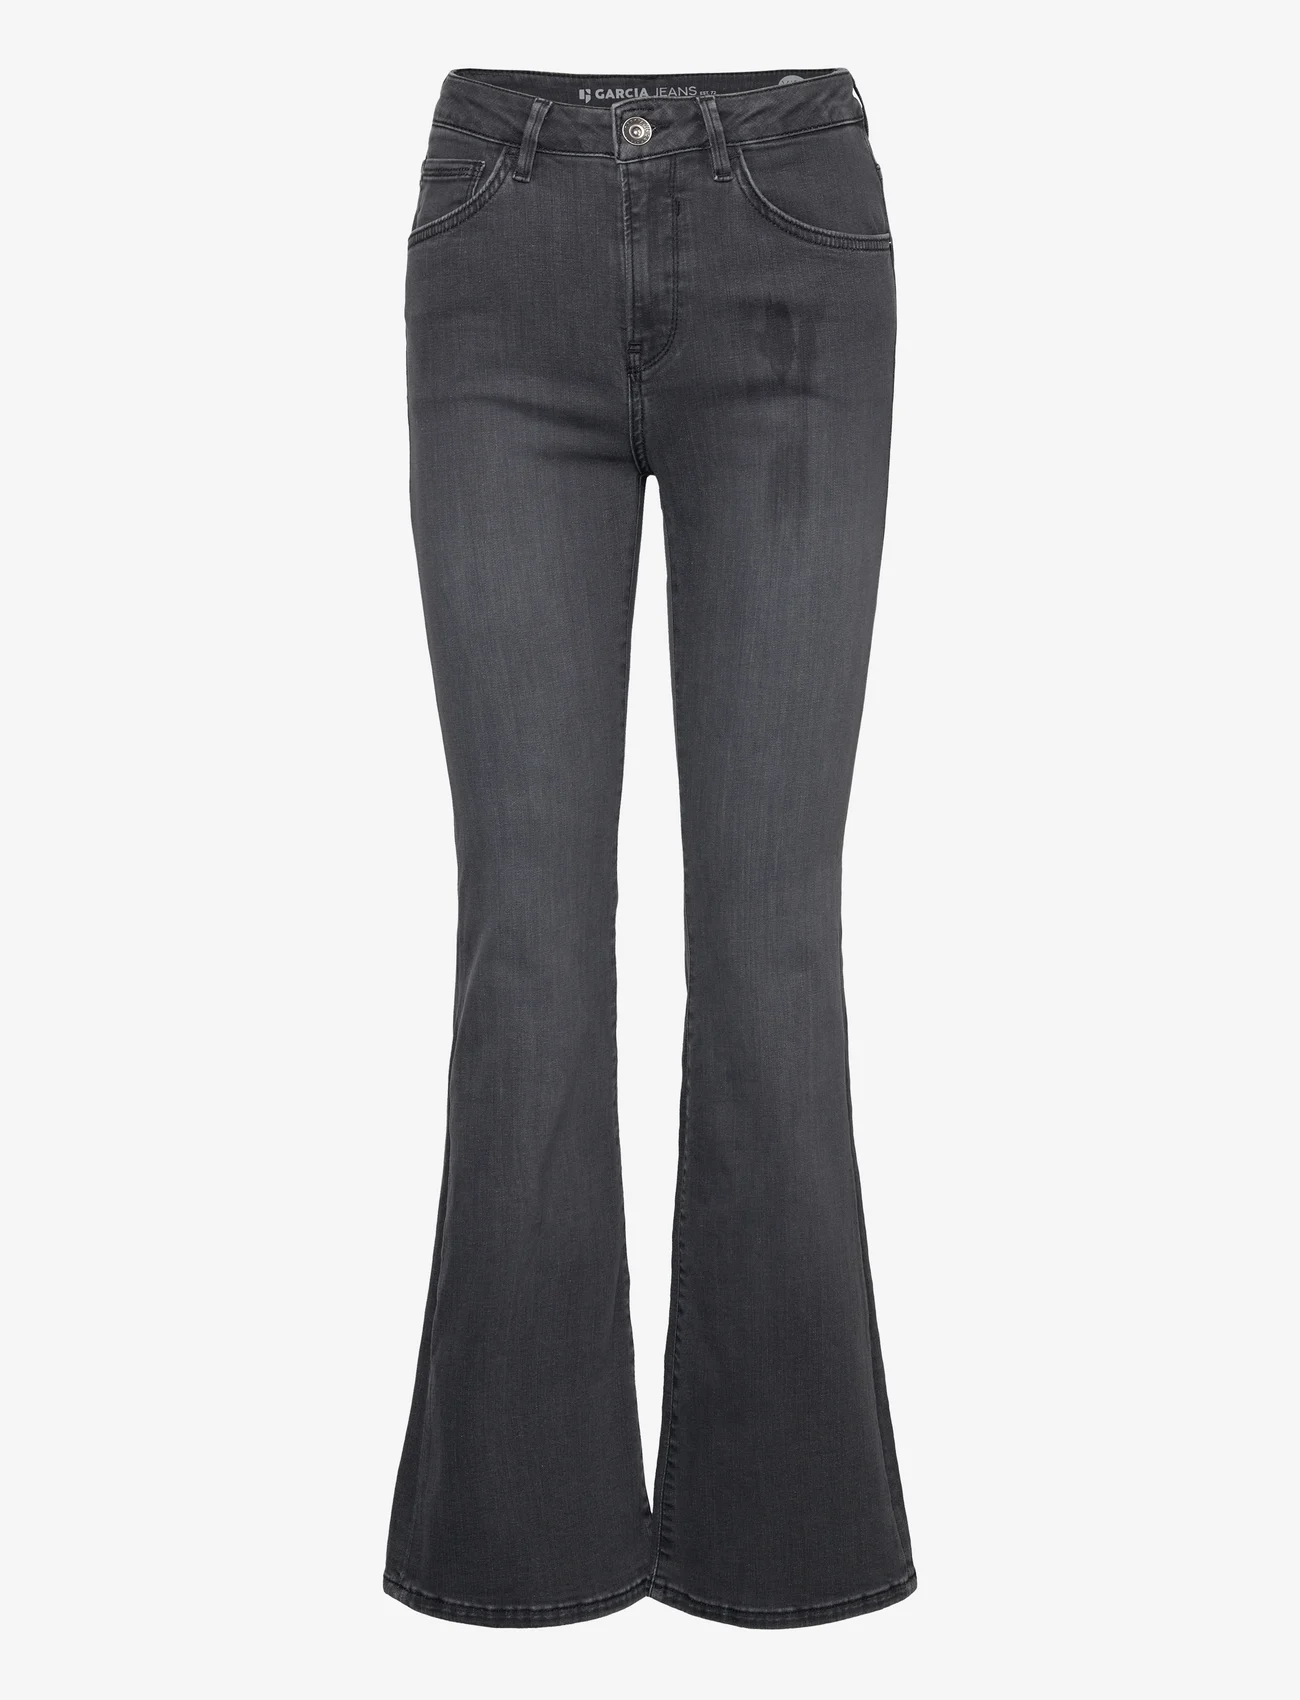 Garcia - Celia - flared jeans - black - 0